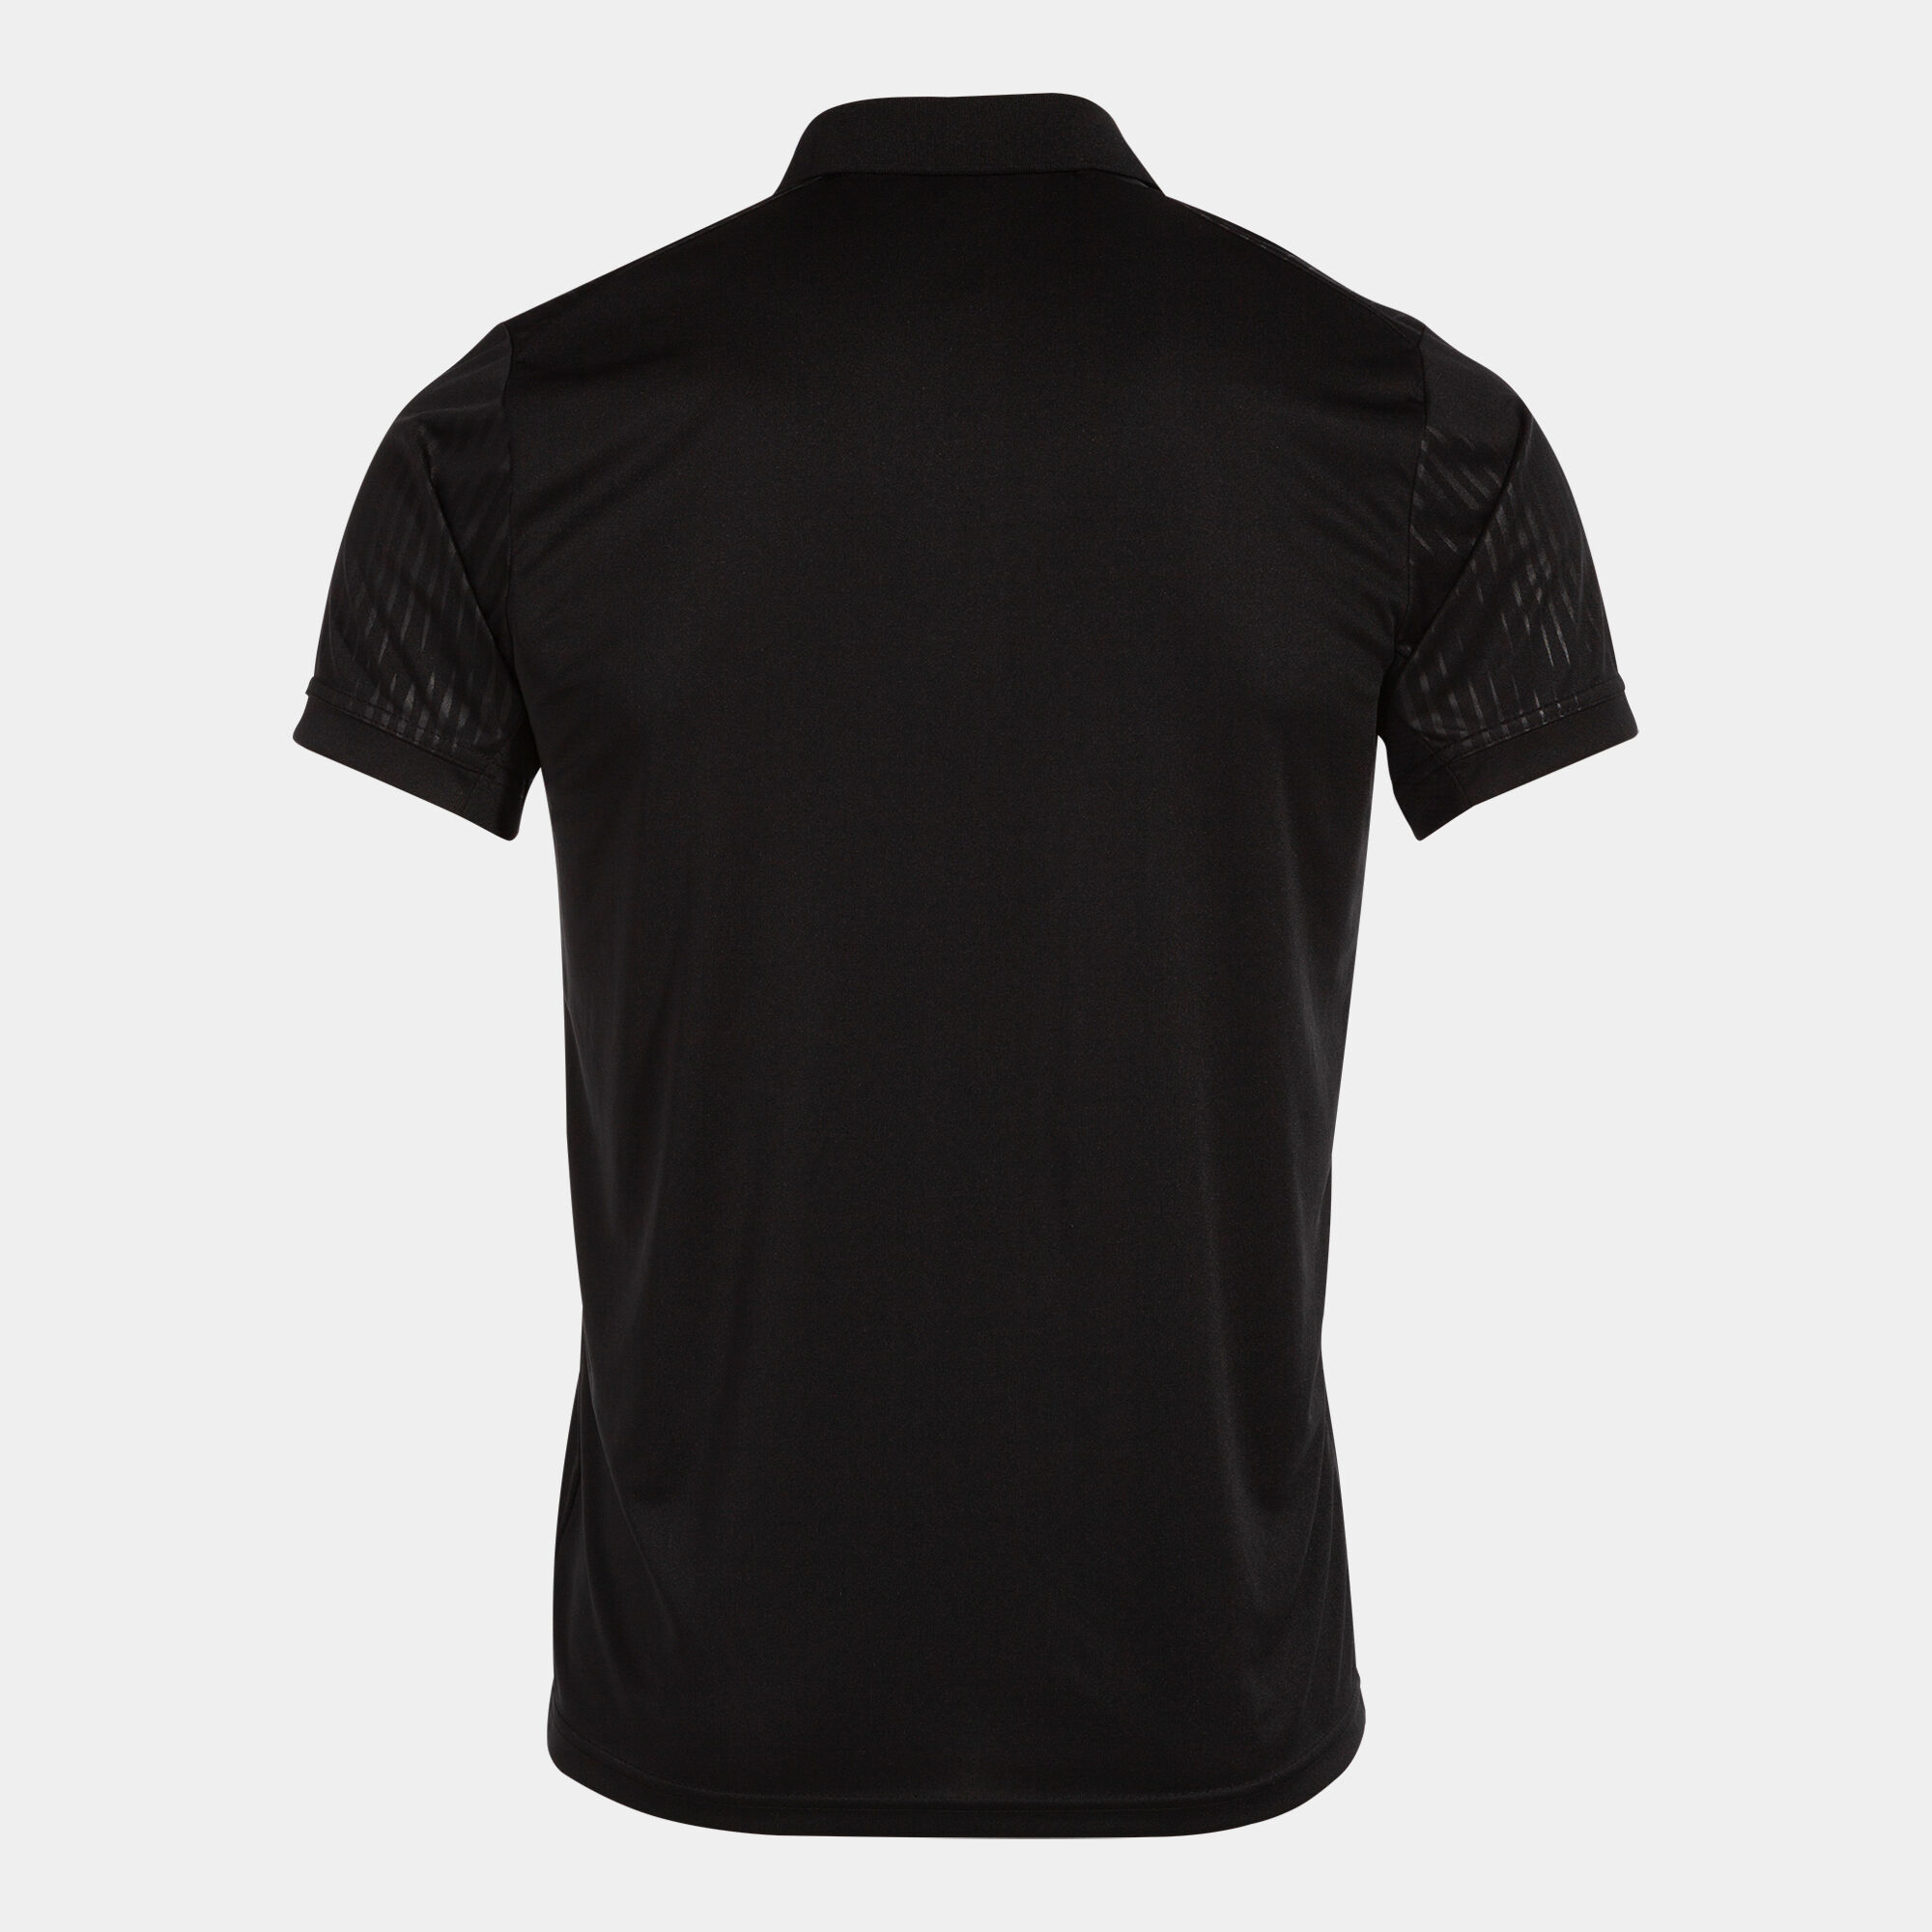 Polo shirt short-sleeve man Montreal black